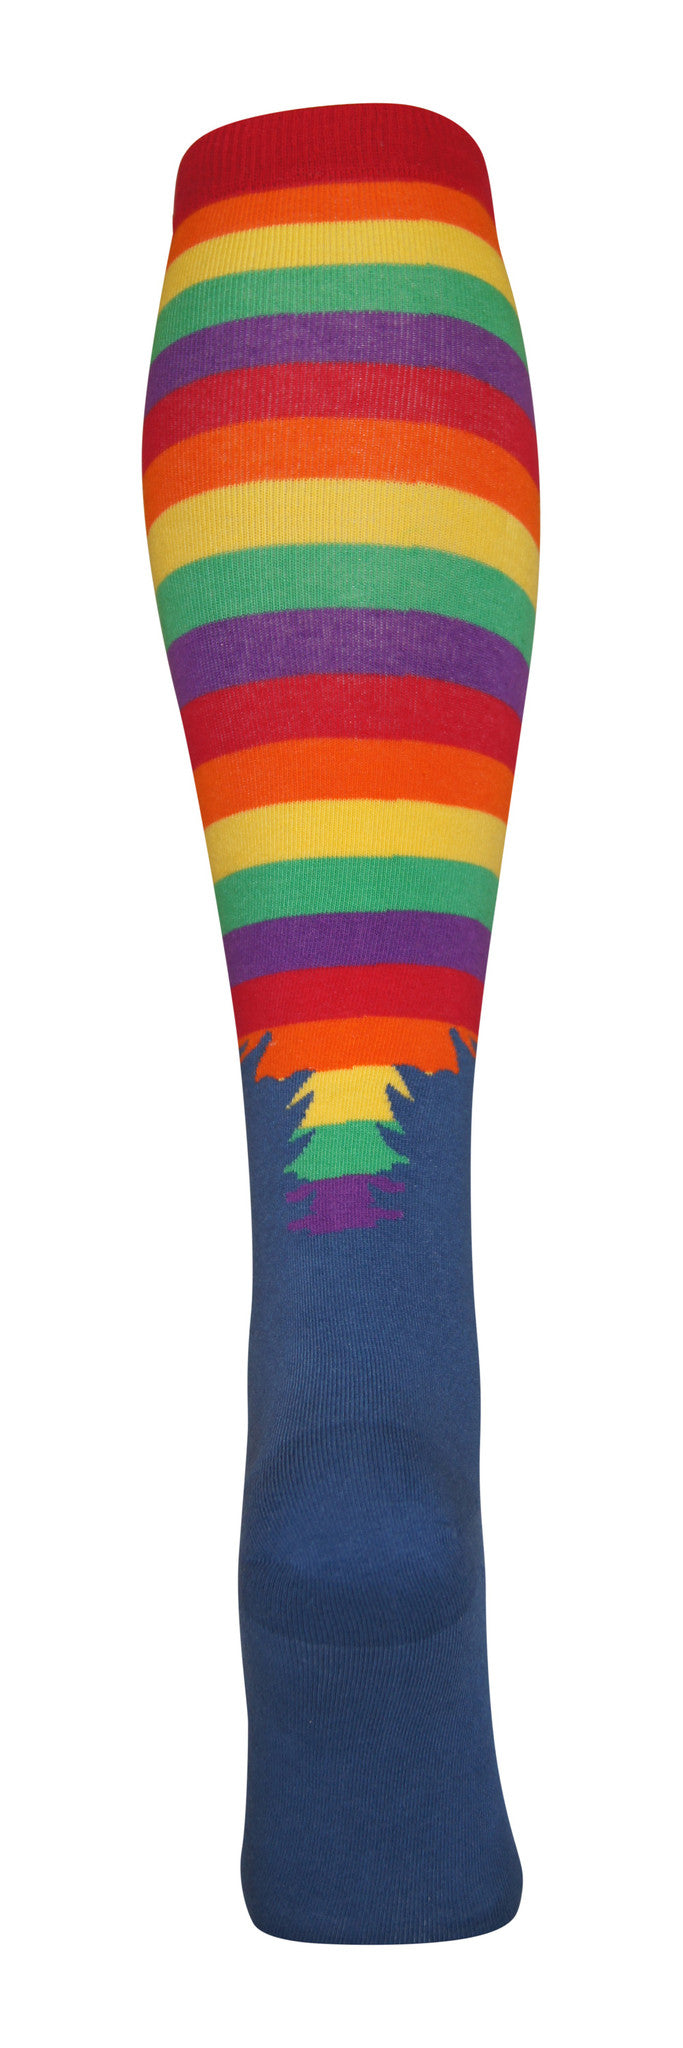 "Rainbow Unicorn" cotton-rich knee sock from lucky7socks.com